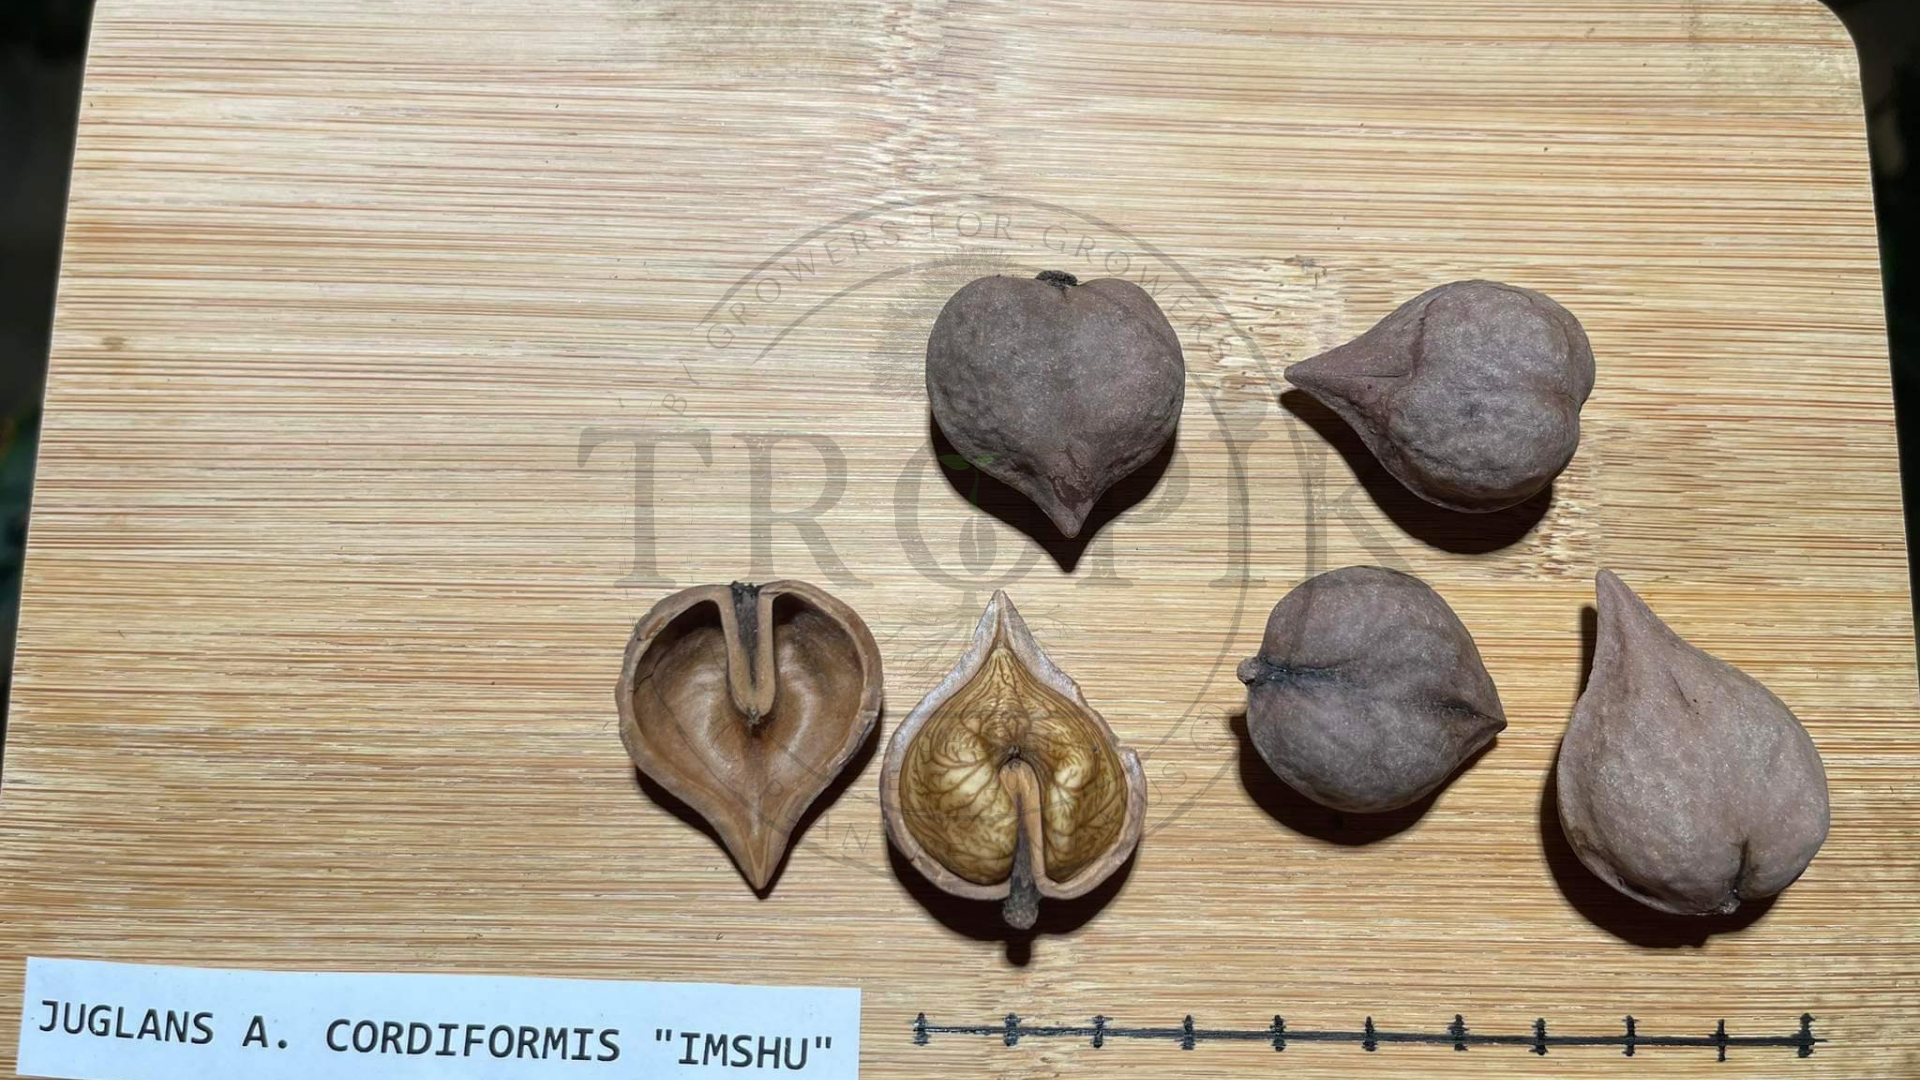 Ořešák srdčitý "Imshu" - Juglans ailantifolia cordiformis, 3 čerstvá semena